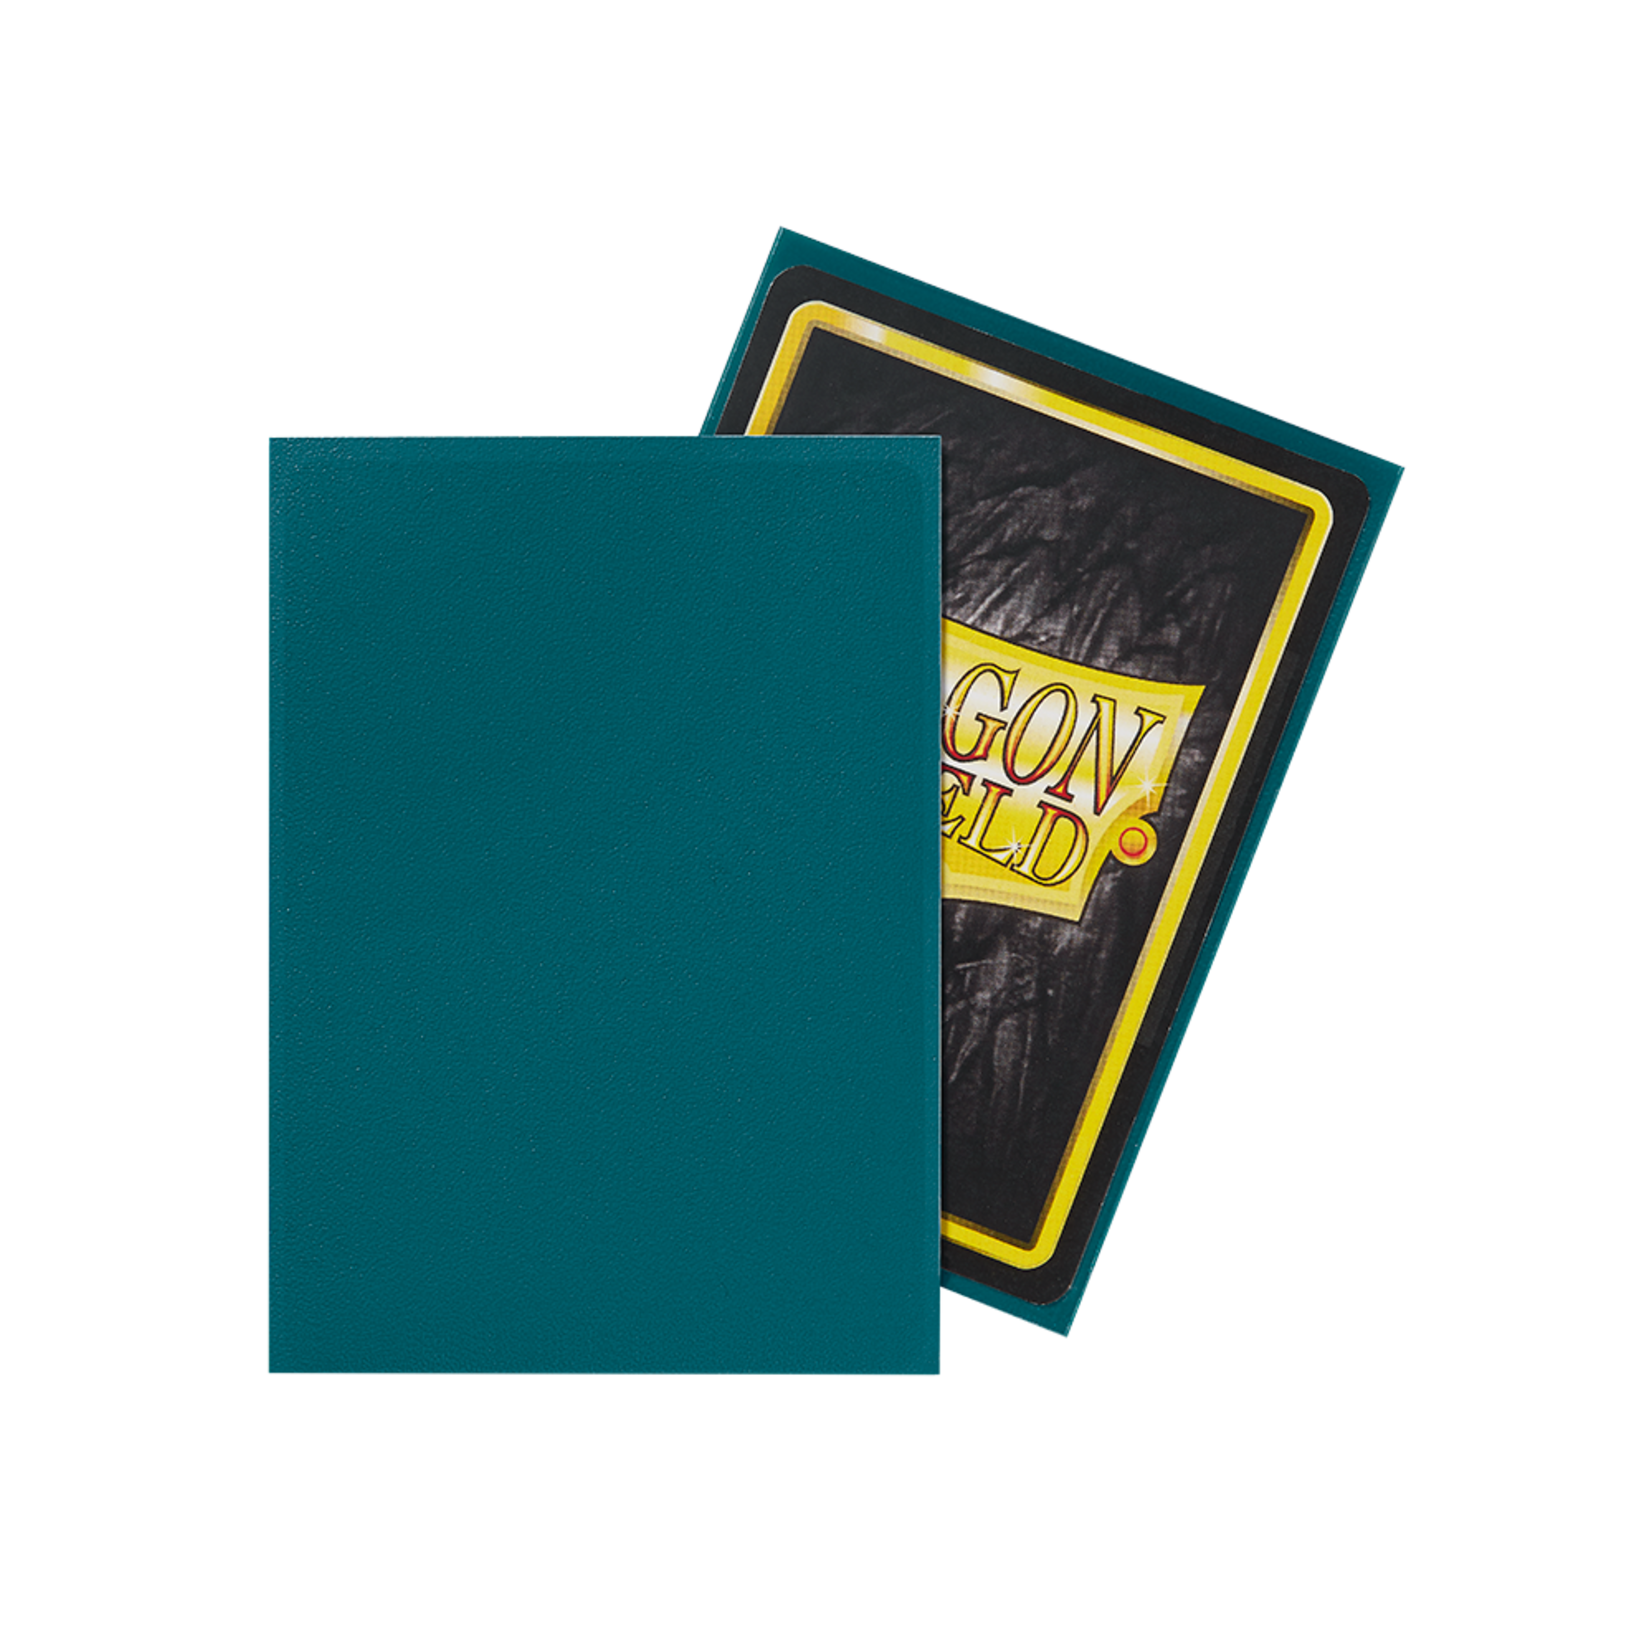 Dragon Shield Deck Protectors: Dragon Shield Matte: Petrol (100) box